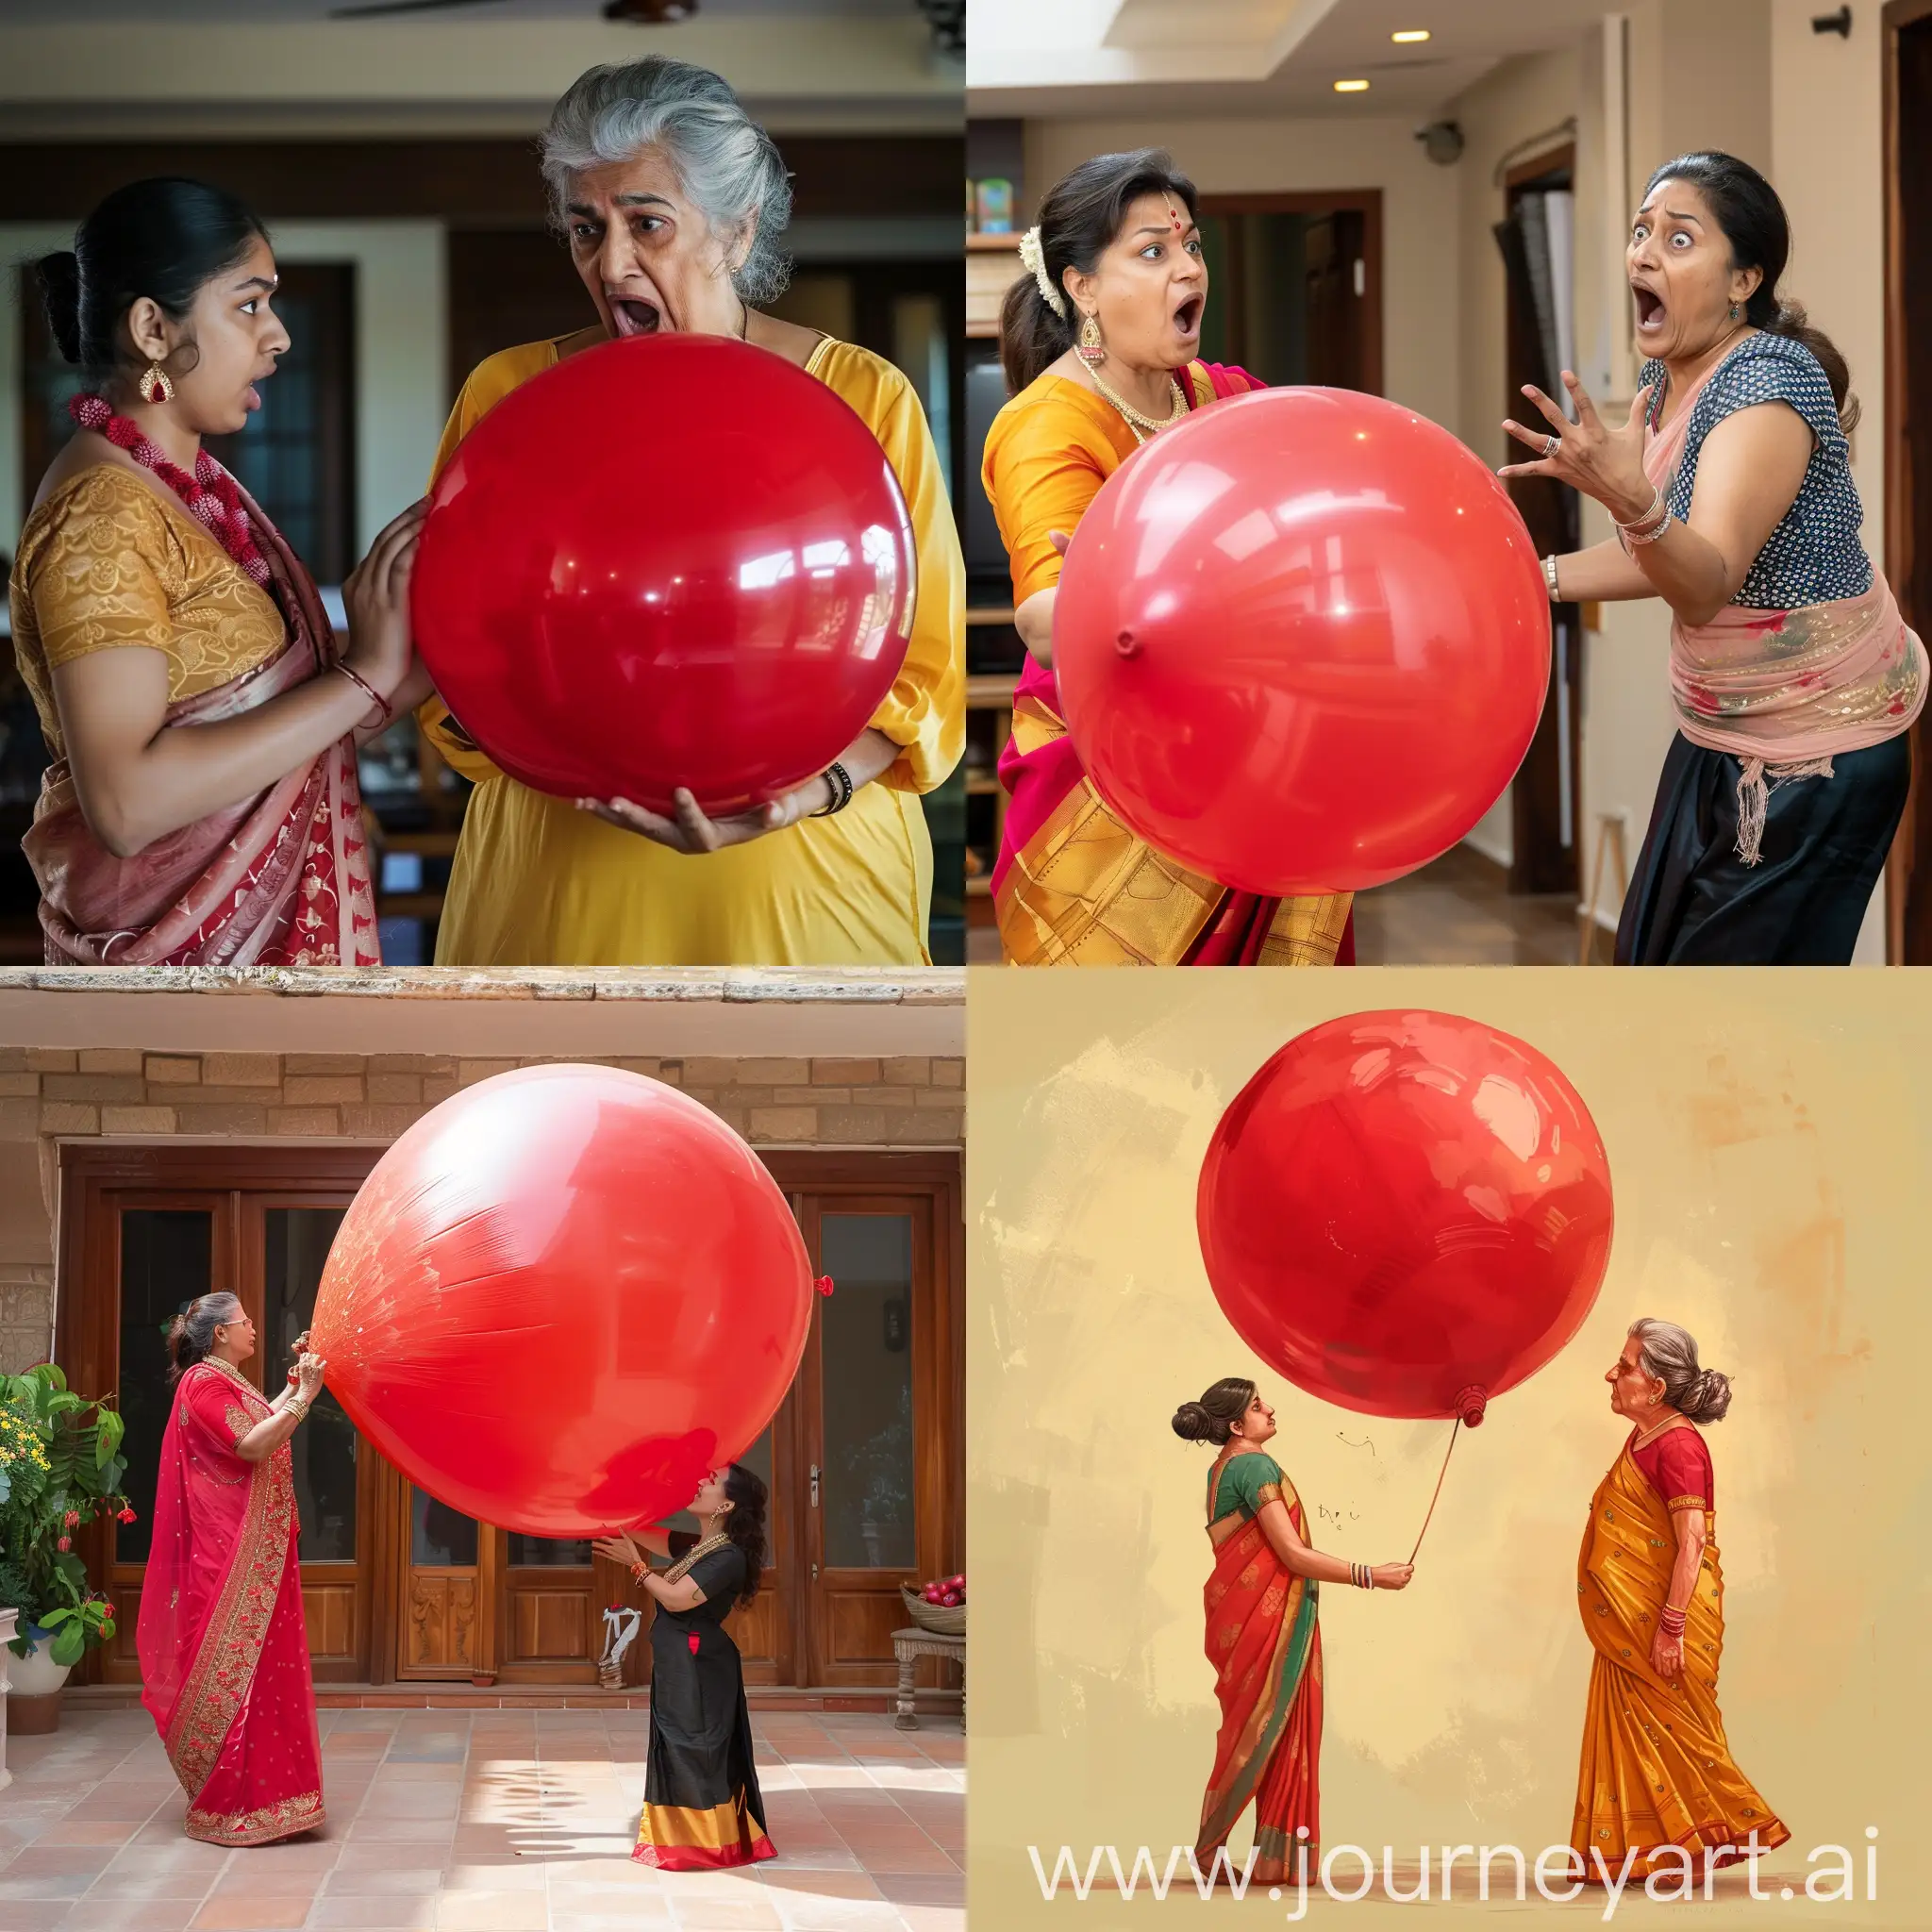 Indian-DaughterinLaw-in-Saree-Bursting-Oversized-Red-Balloon